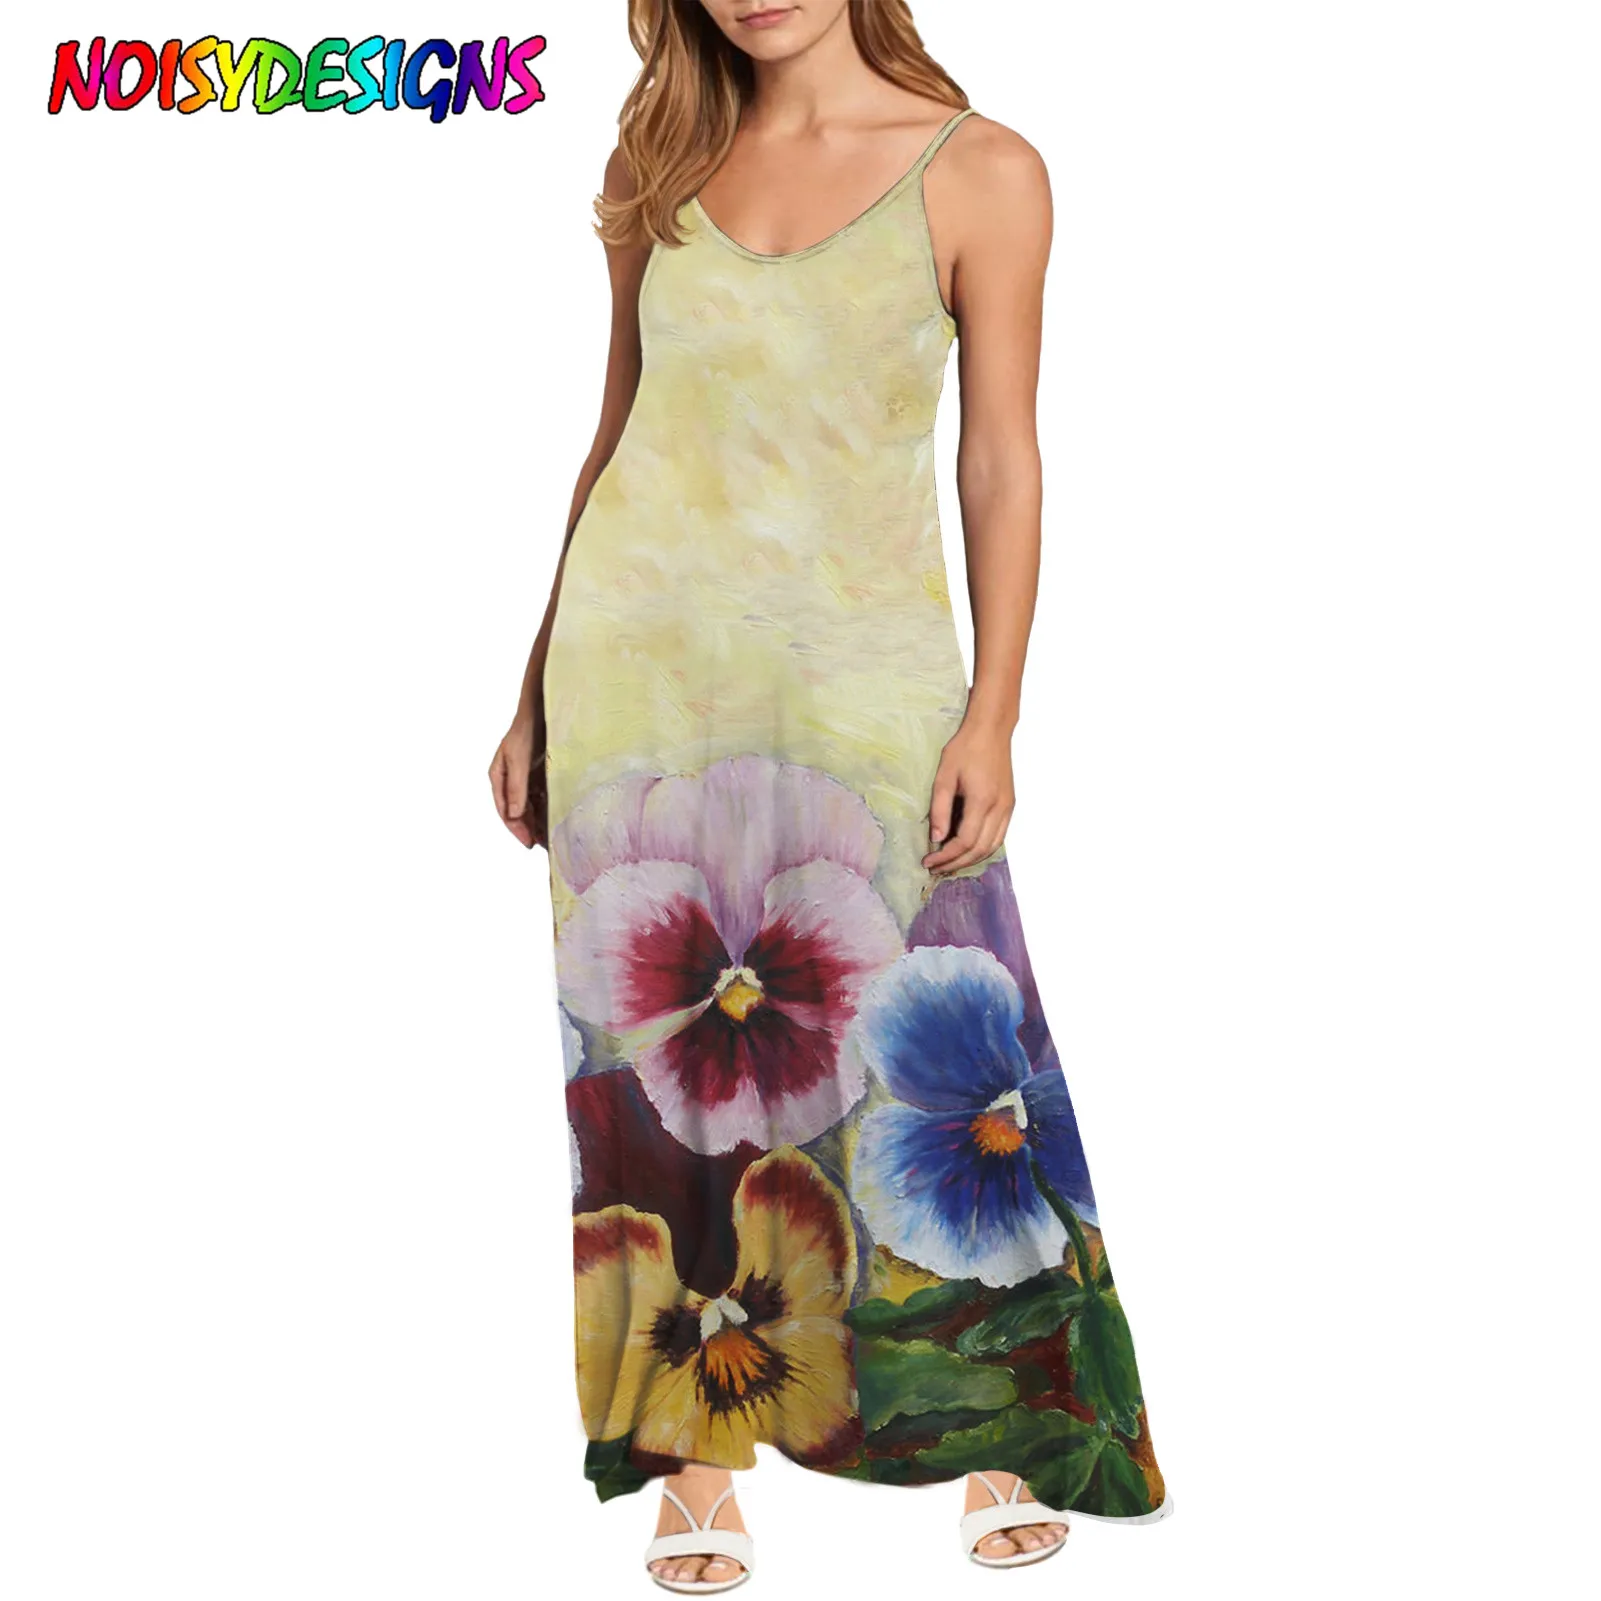 NOISYDESIGNS Summer Fairy Dress Women Pansy Flowers Painting Dress Sleeveless Casual Elegant Color Floral Print Dress Women 2021